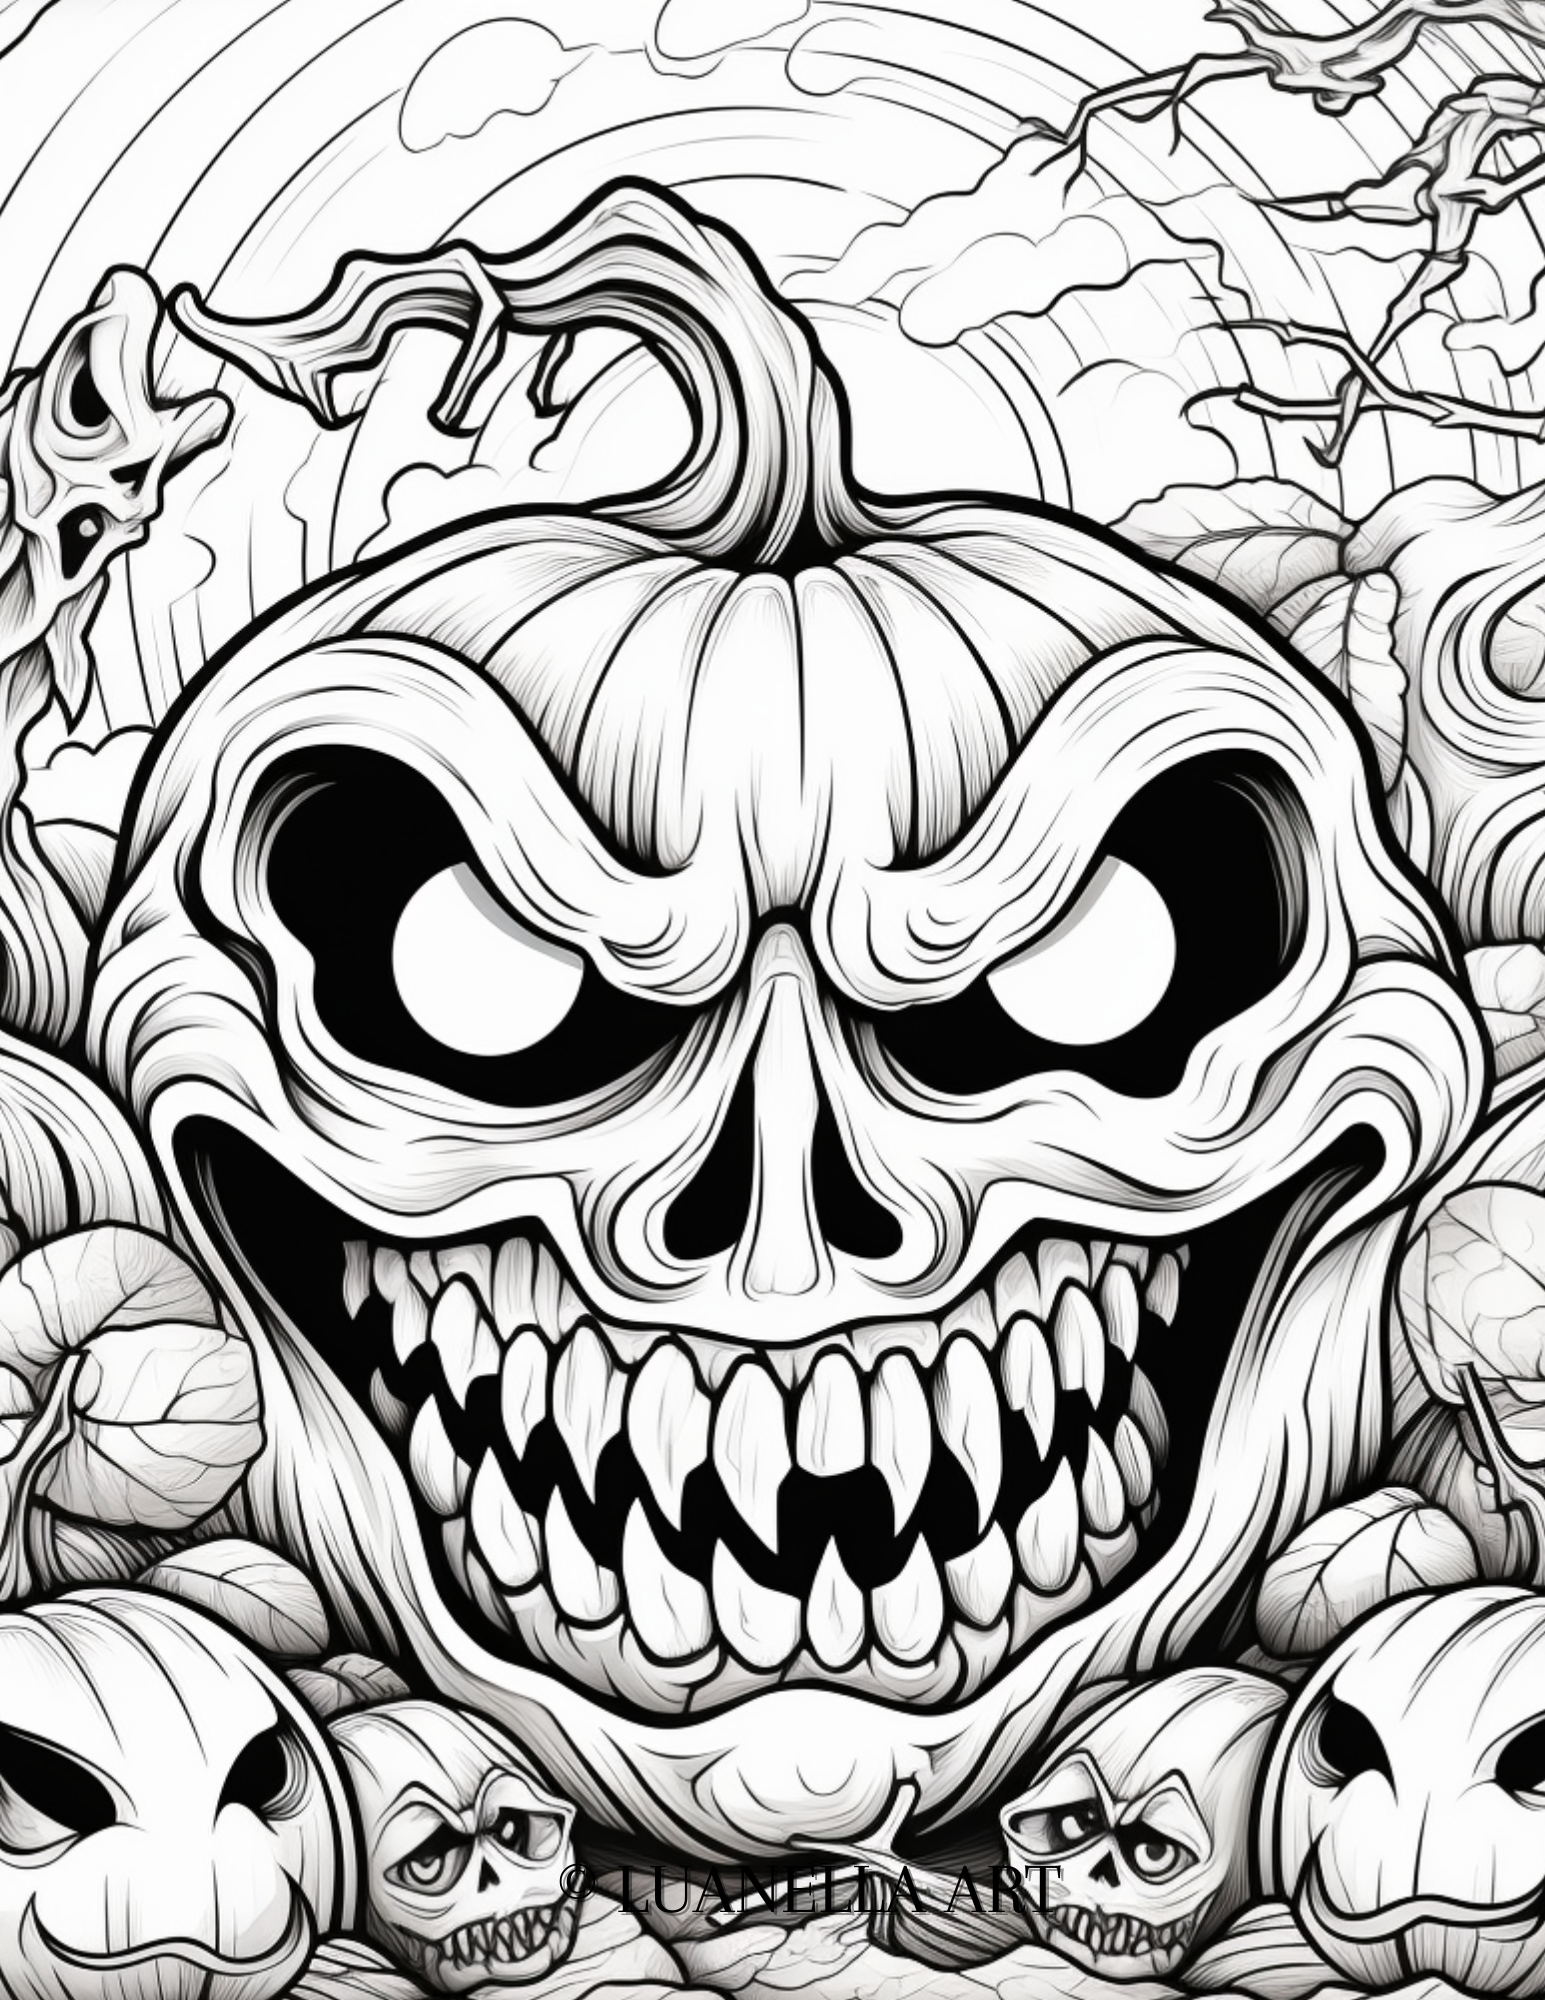 Super scary pumpkin carving instant download pdf letter size â luanella art